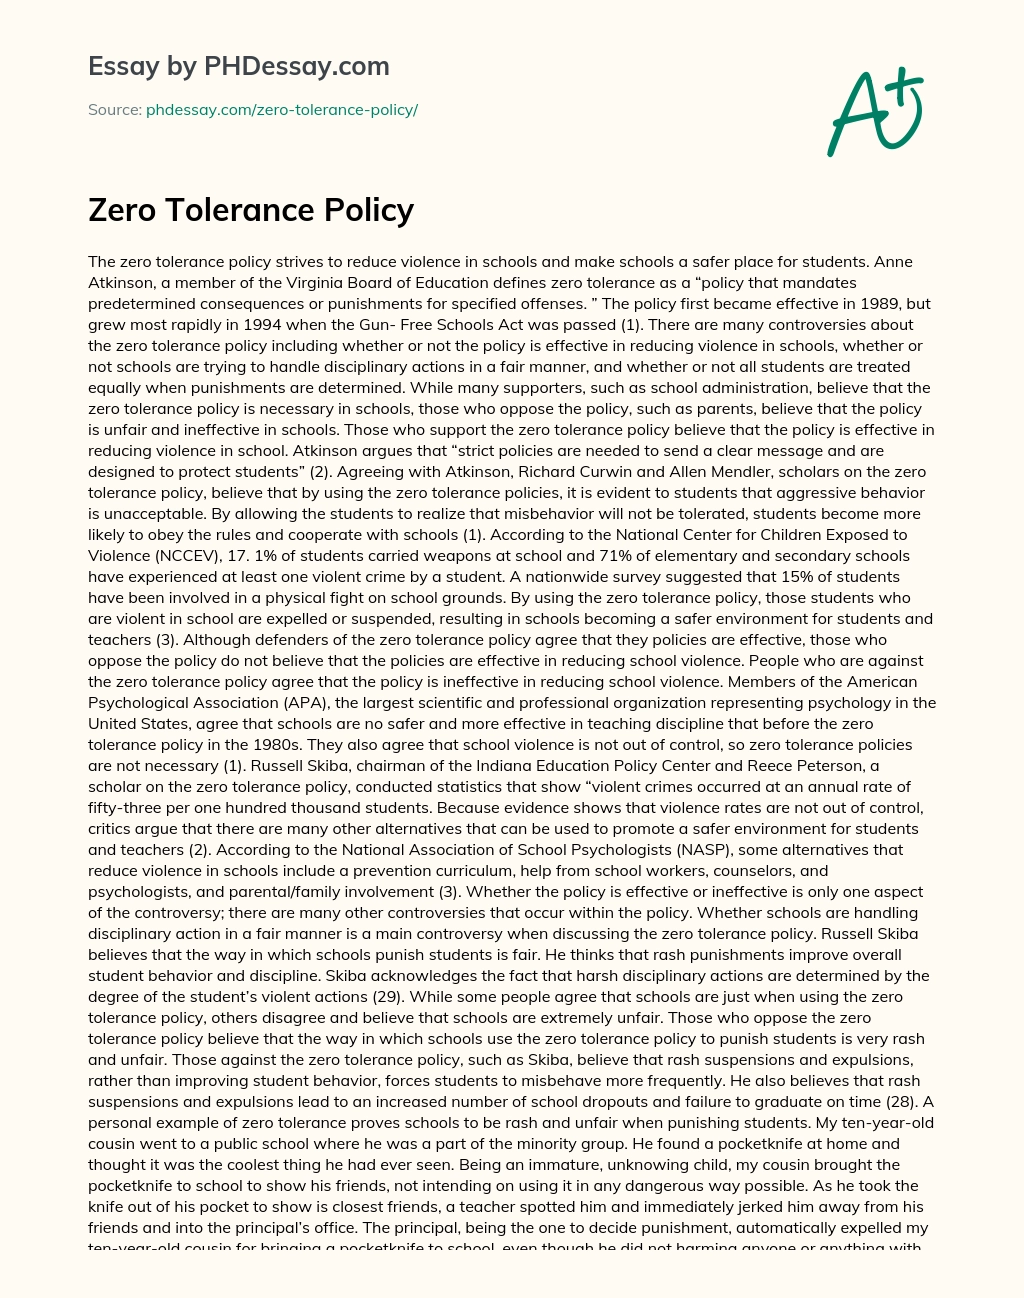 Zero Tolerance Policy essay